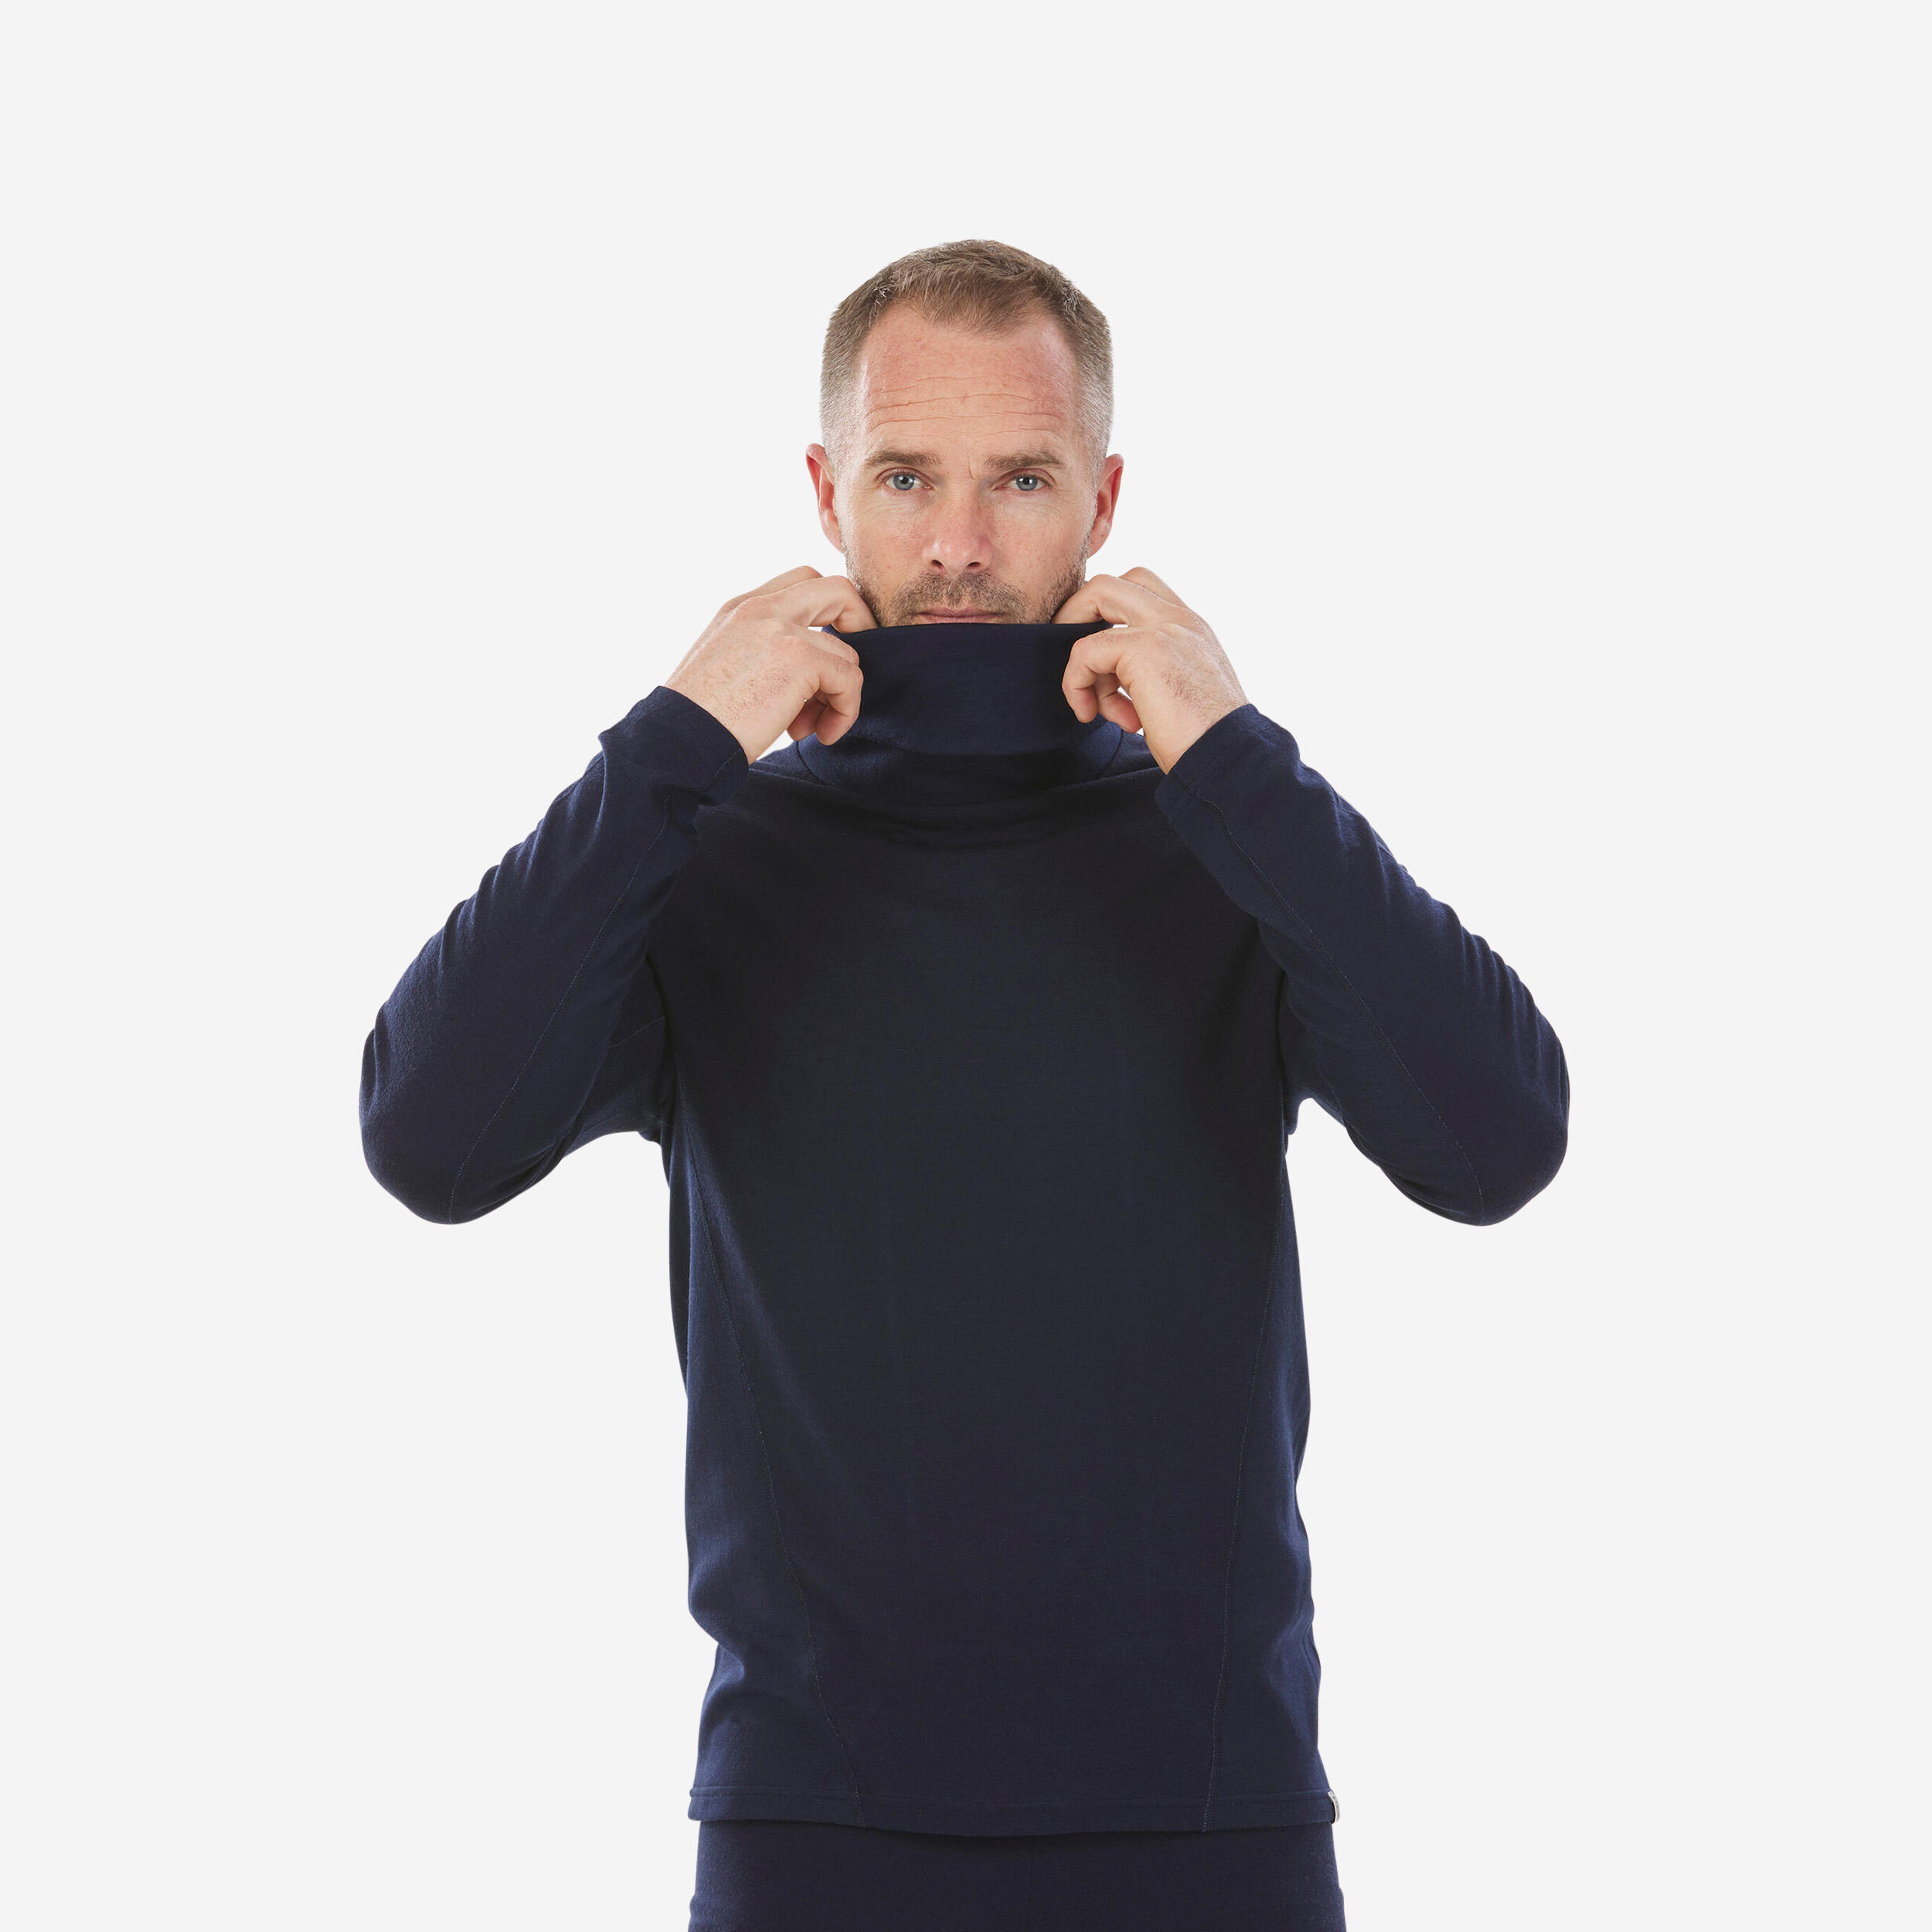 Men's Merino Wool Hiking Shirt - MT 900 - Asphalt blue, Navy blue - Forclaz  - Decathlon